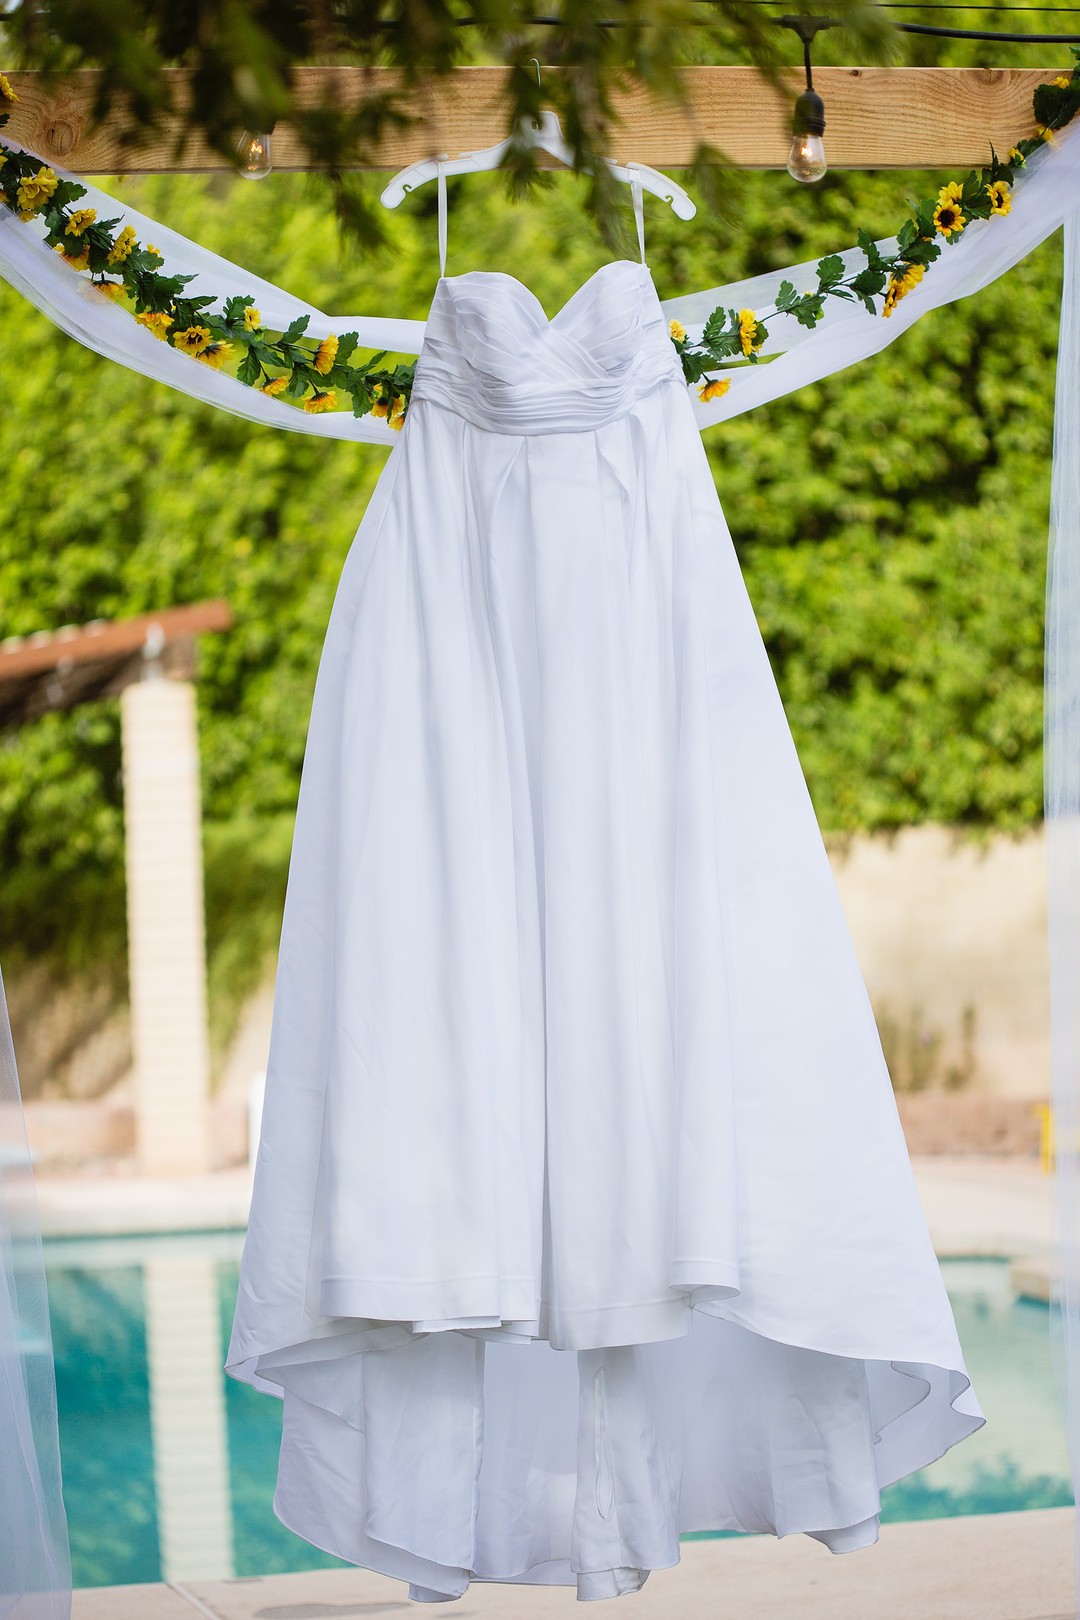 Fun and romantic Arizona backyard wedding white dress hanging